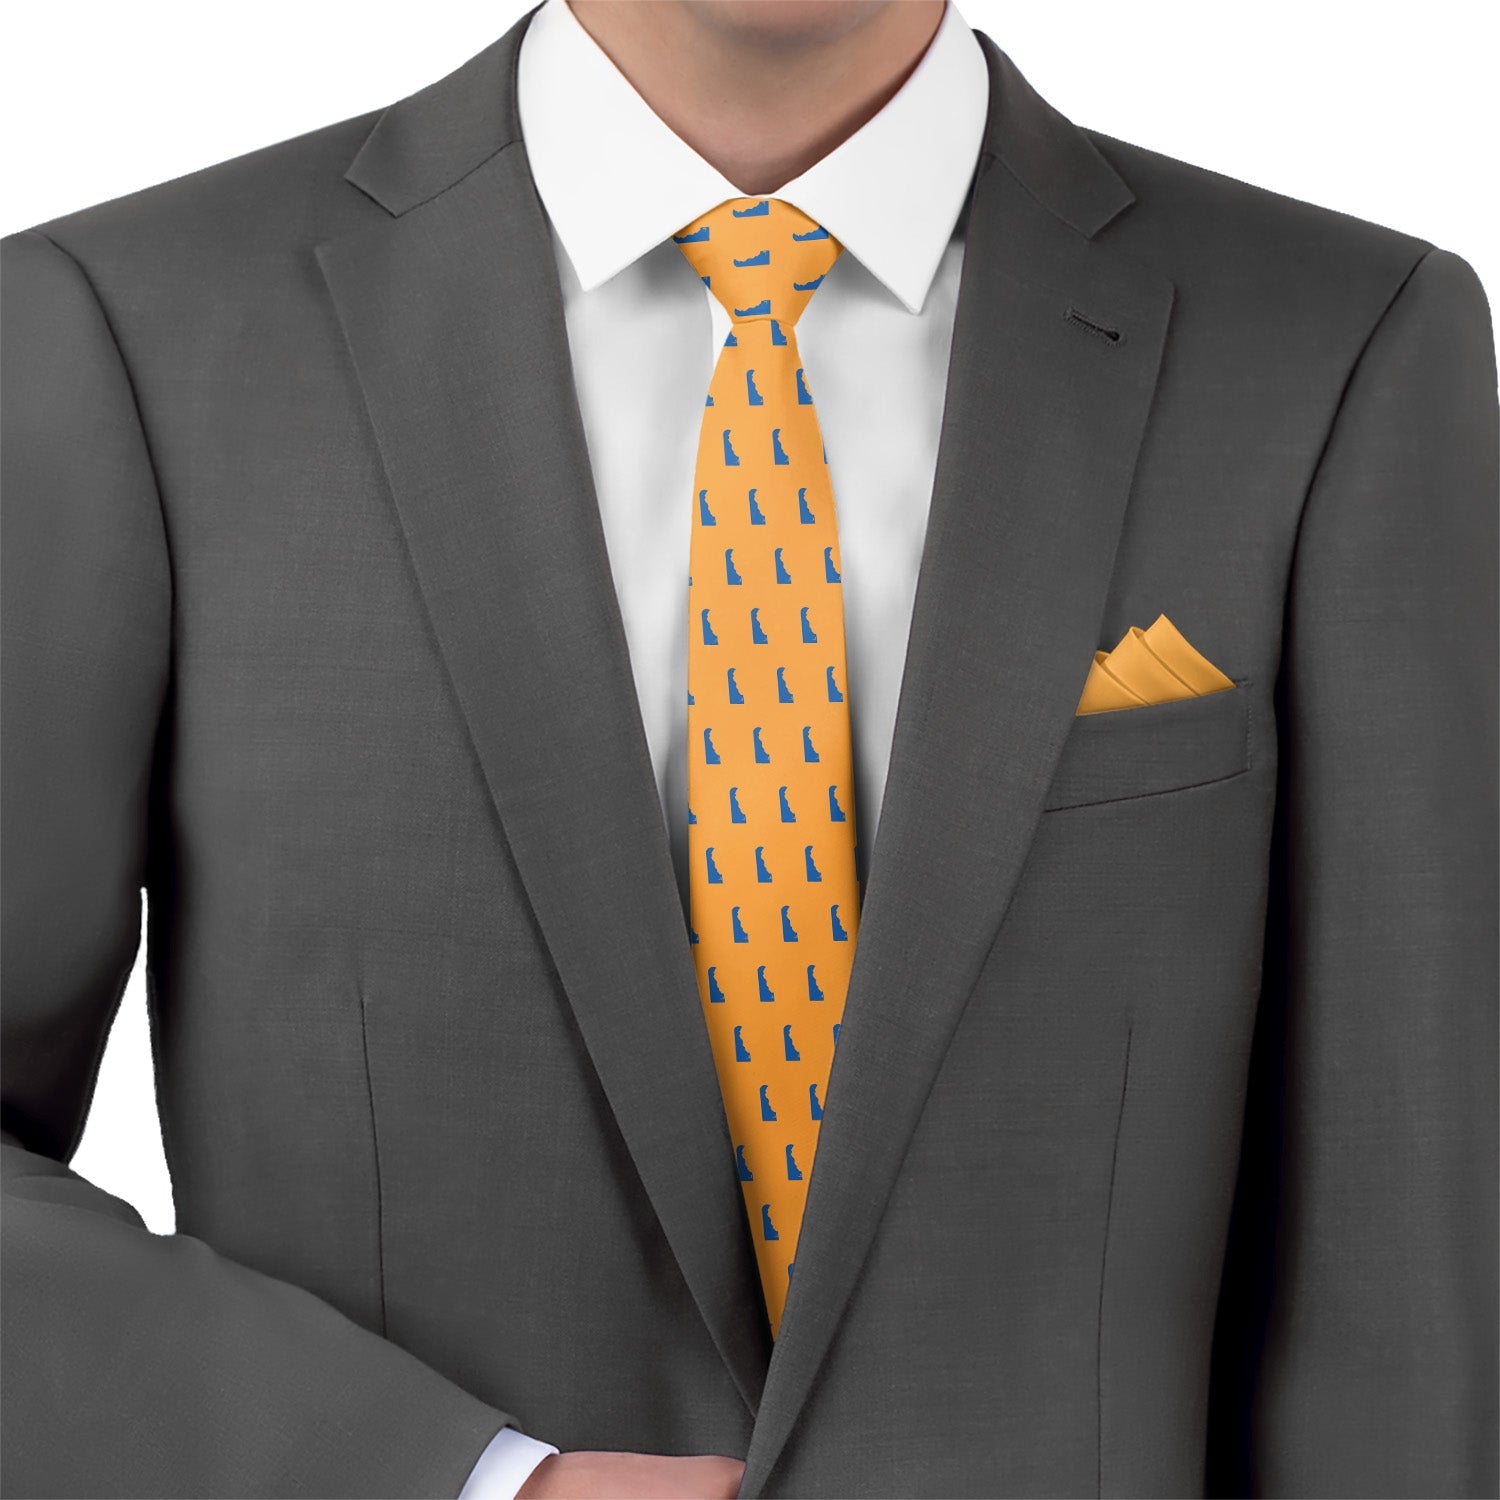 Delaware State Outline Necktie -  -  - Knotty Tie Co.